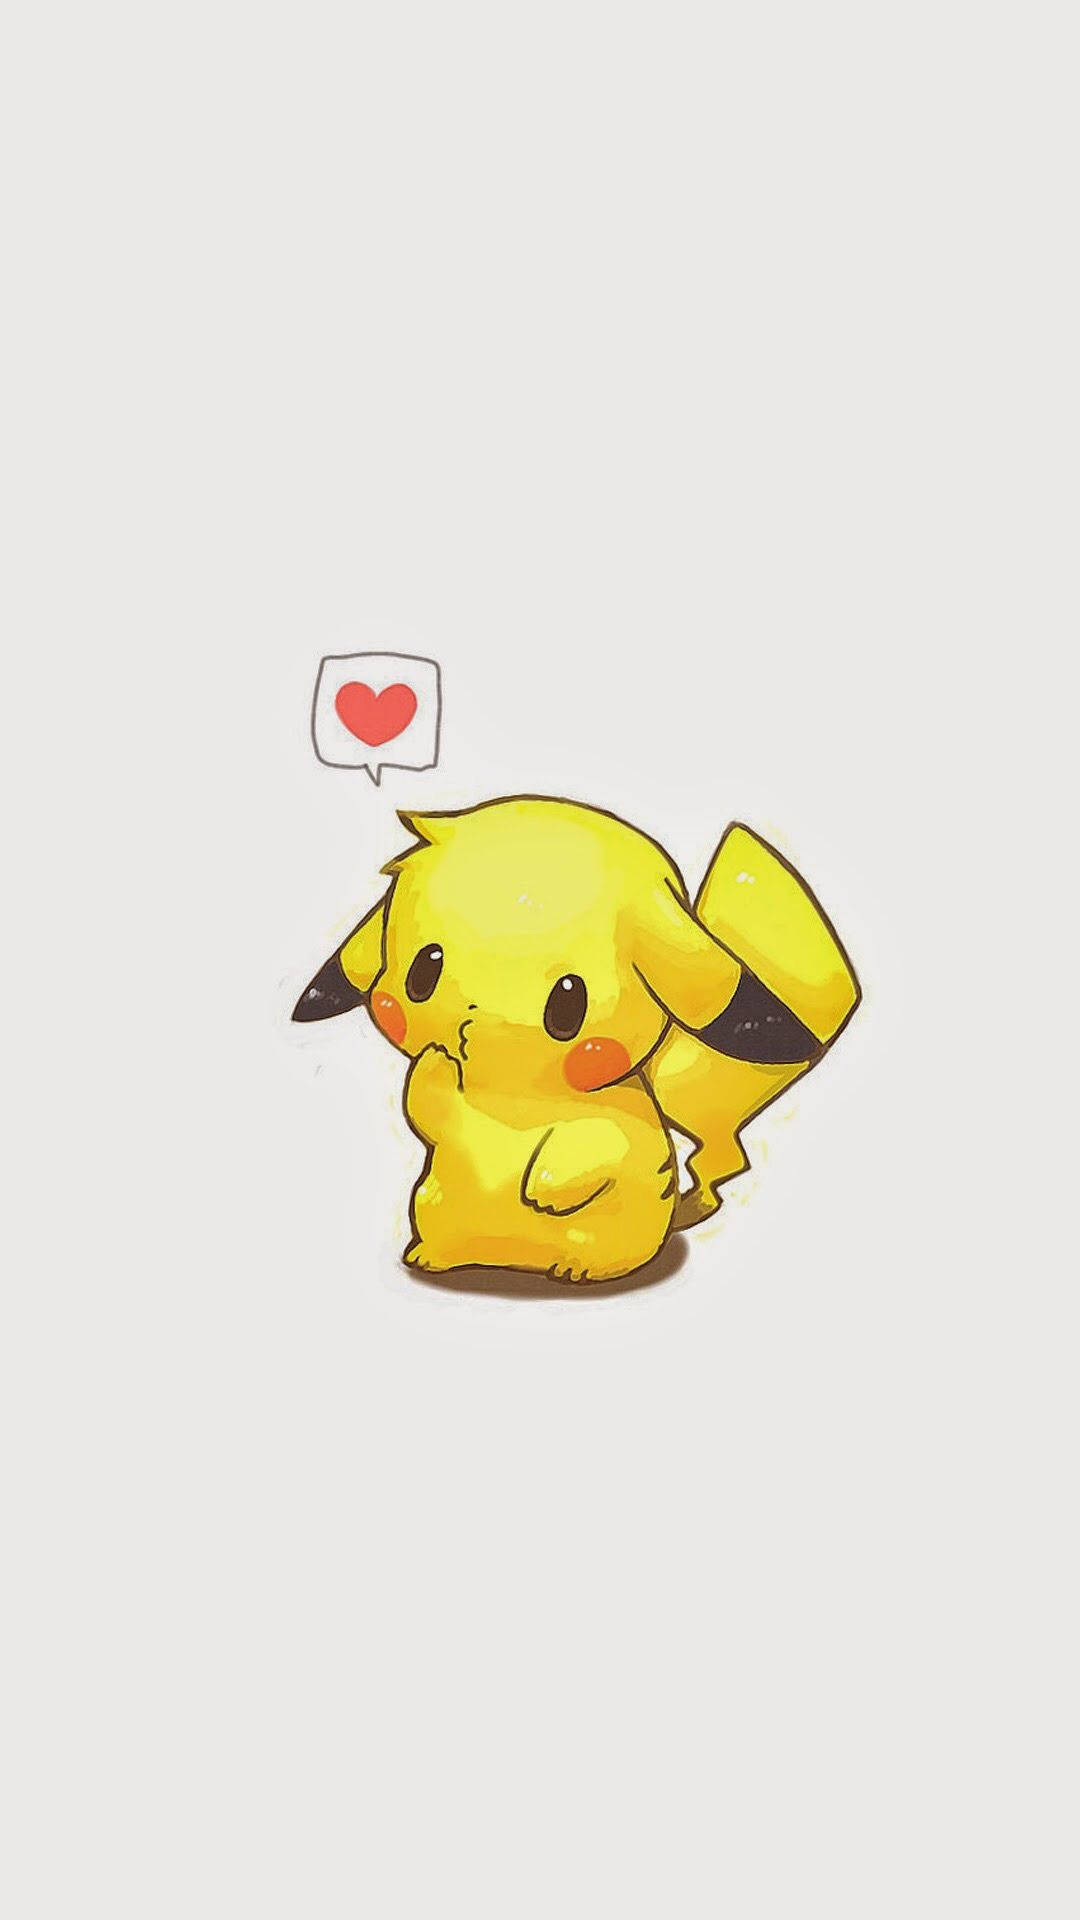 Pikachu Cute Image Wallpaper